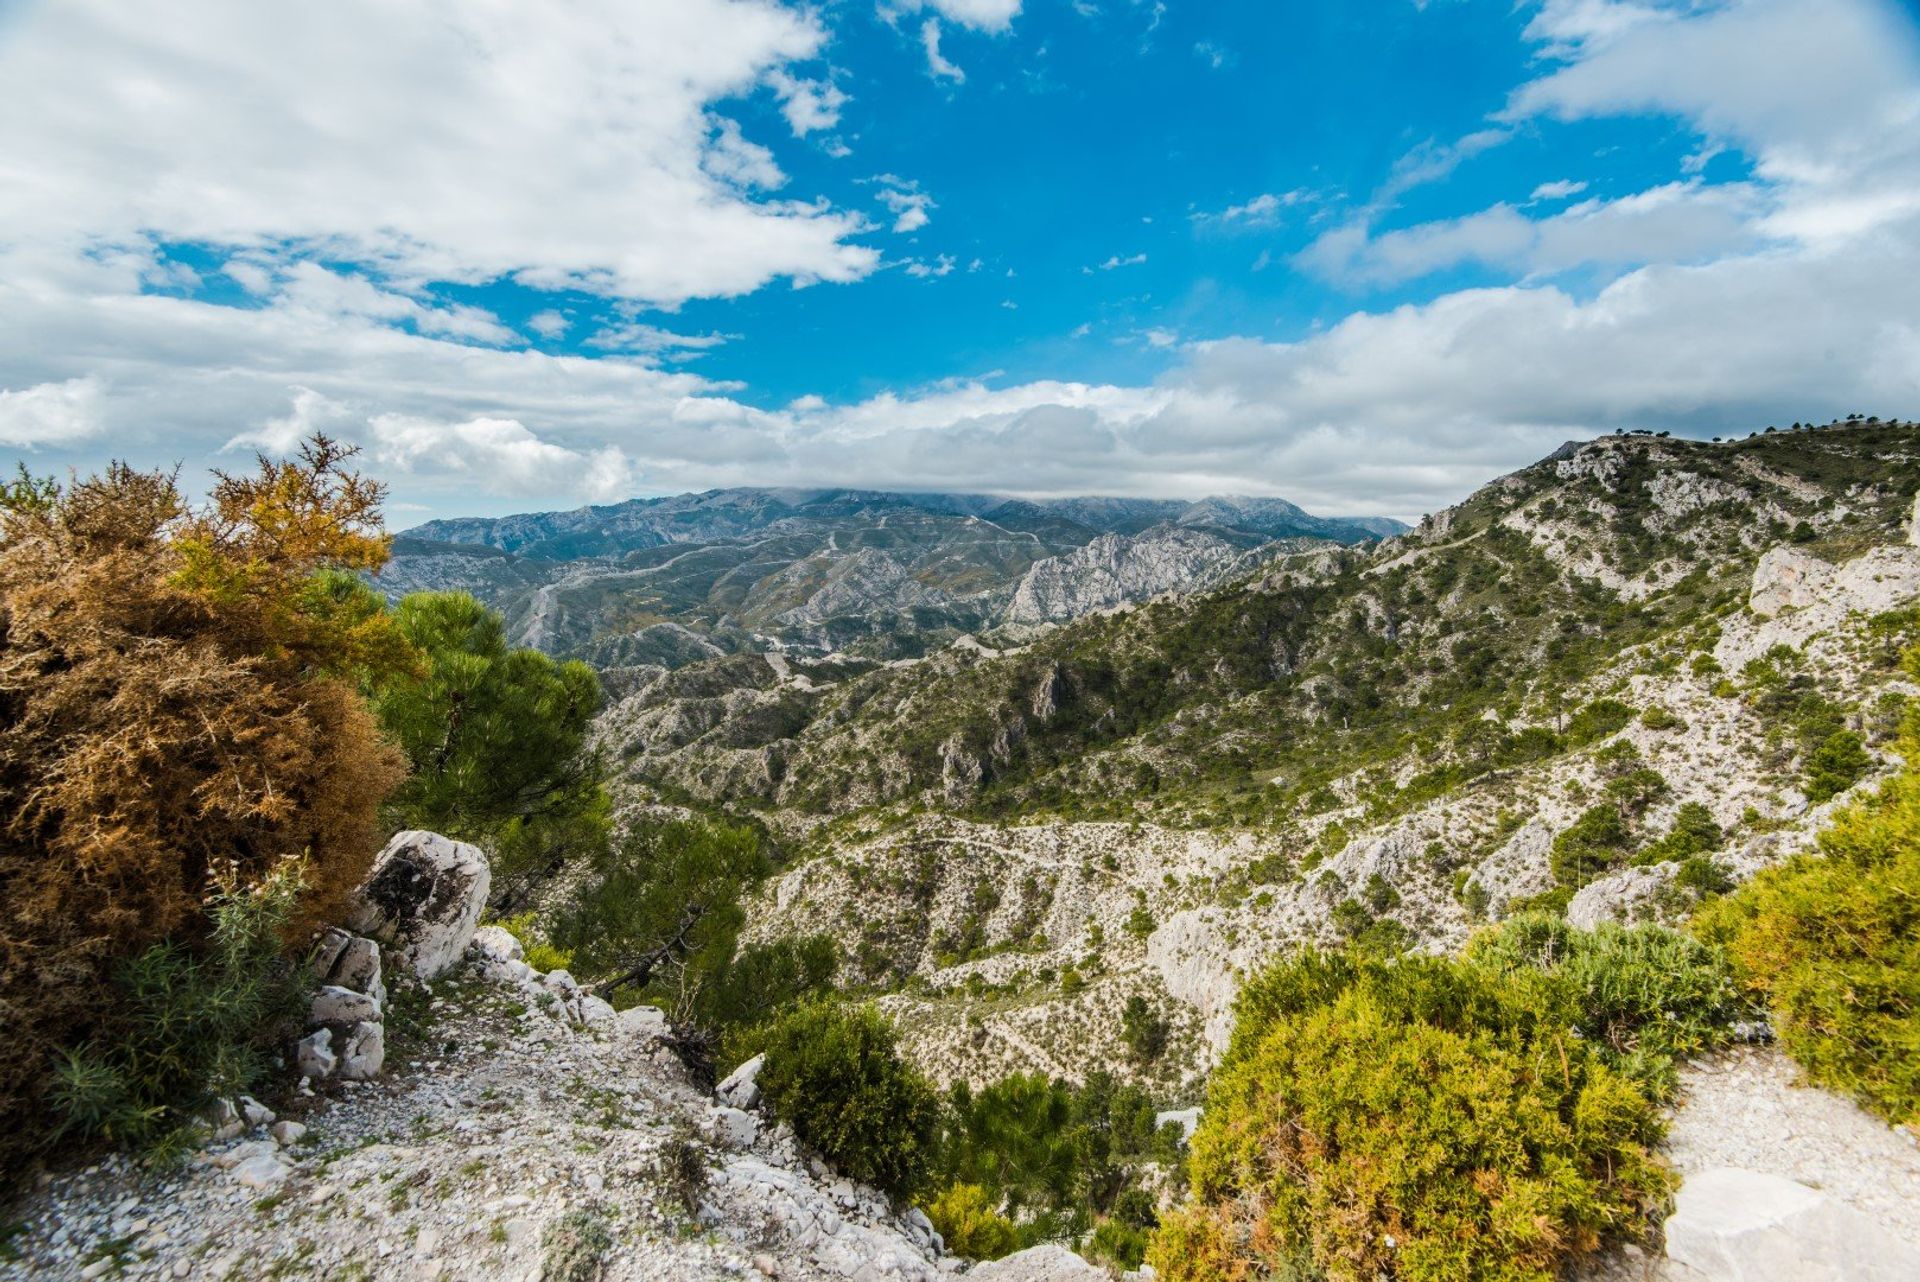 Sierras de Tejeda Natural Park in Nerja, stretching across the provincial border of Granada and Malaga